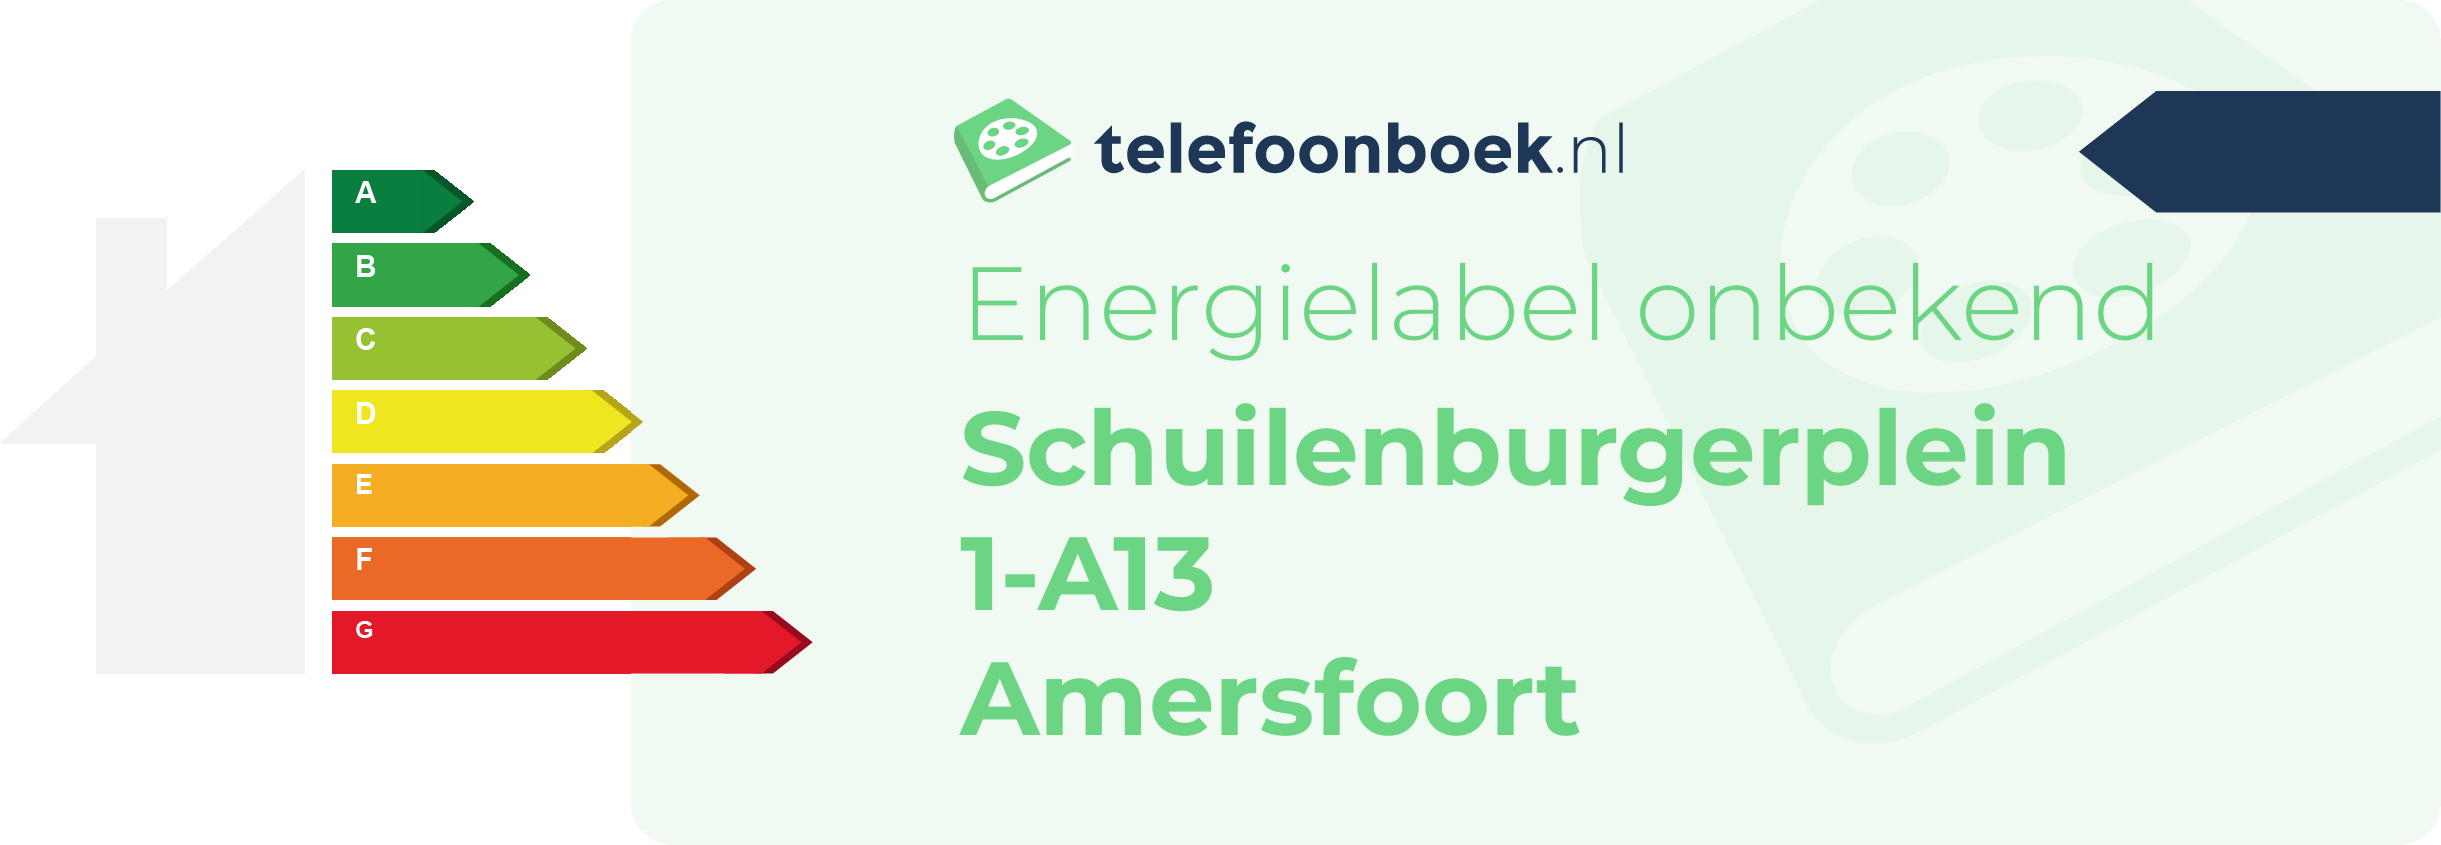 Energielabel Schuilenburgerplein 1-A13 Amersfoort